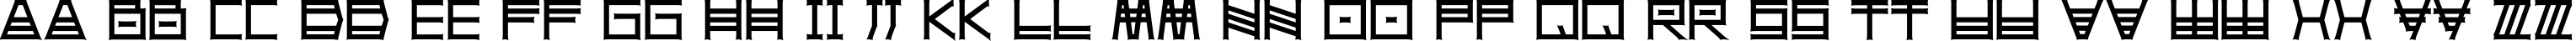 Пример написания английского алфавита шрифтом SheruPro